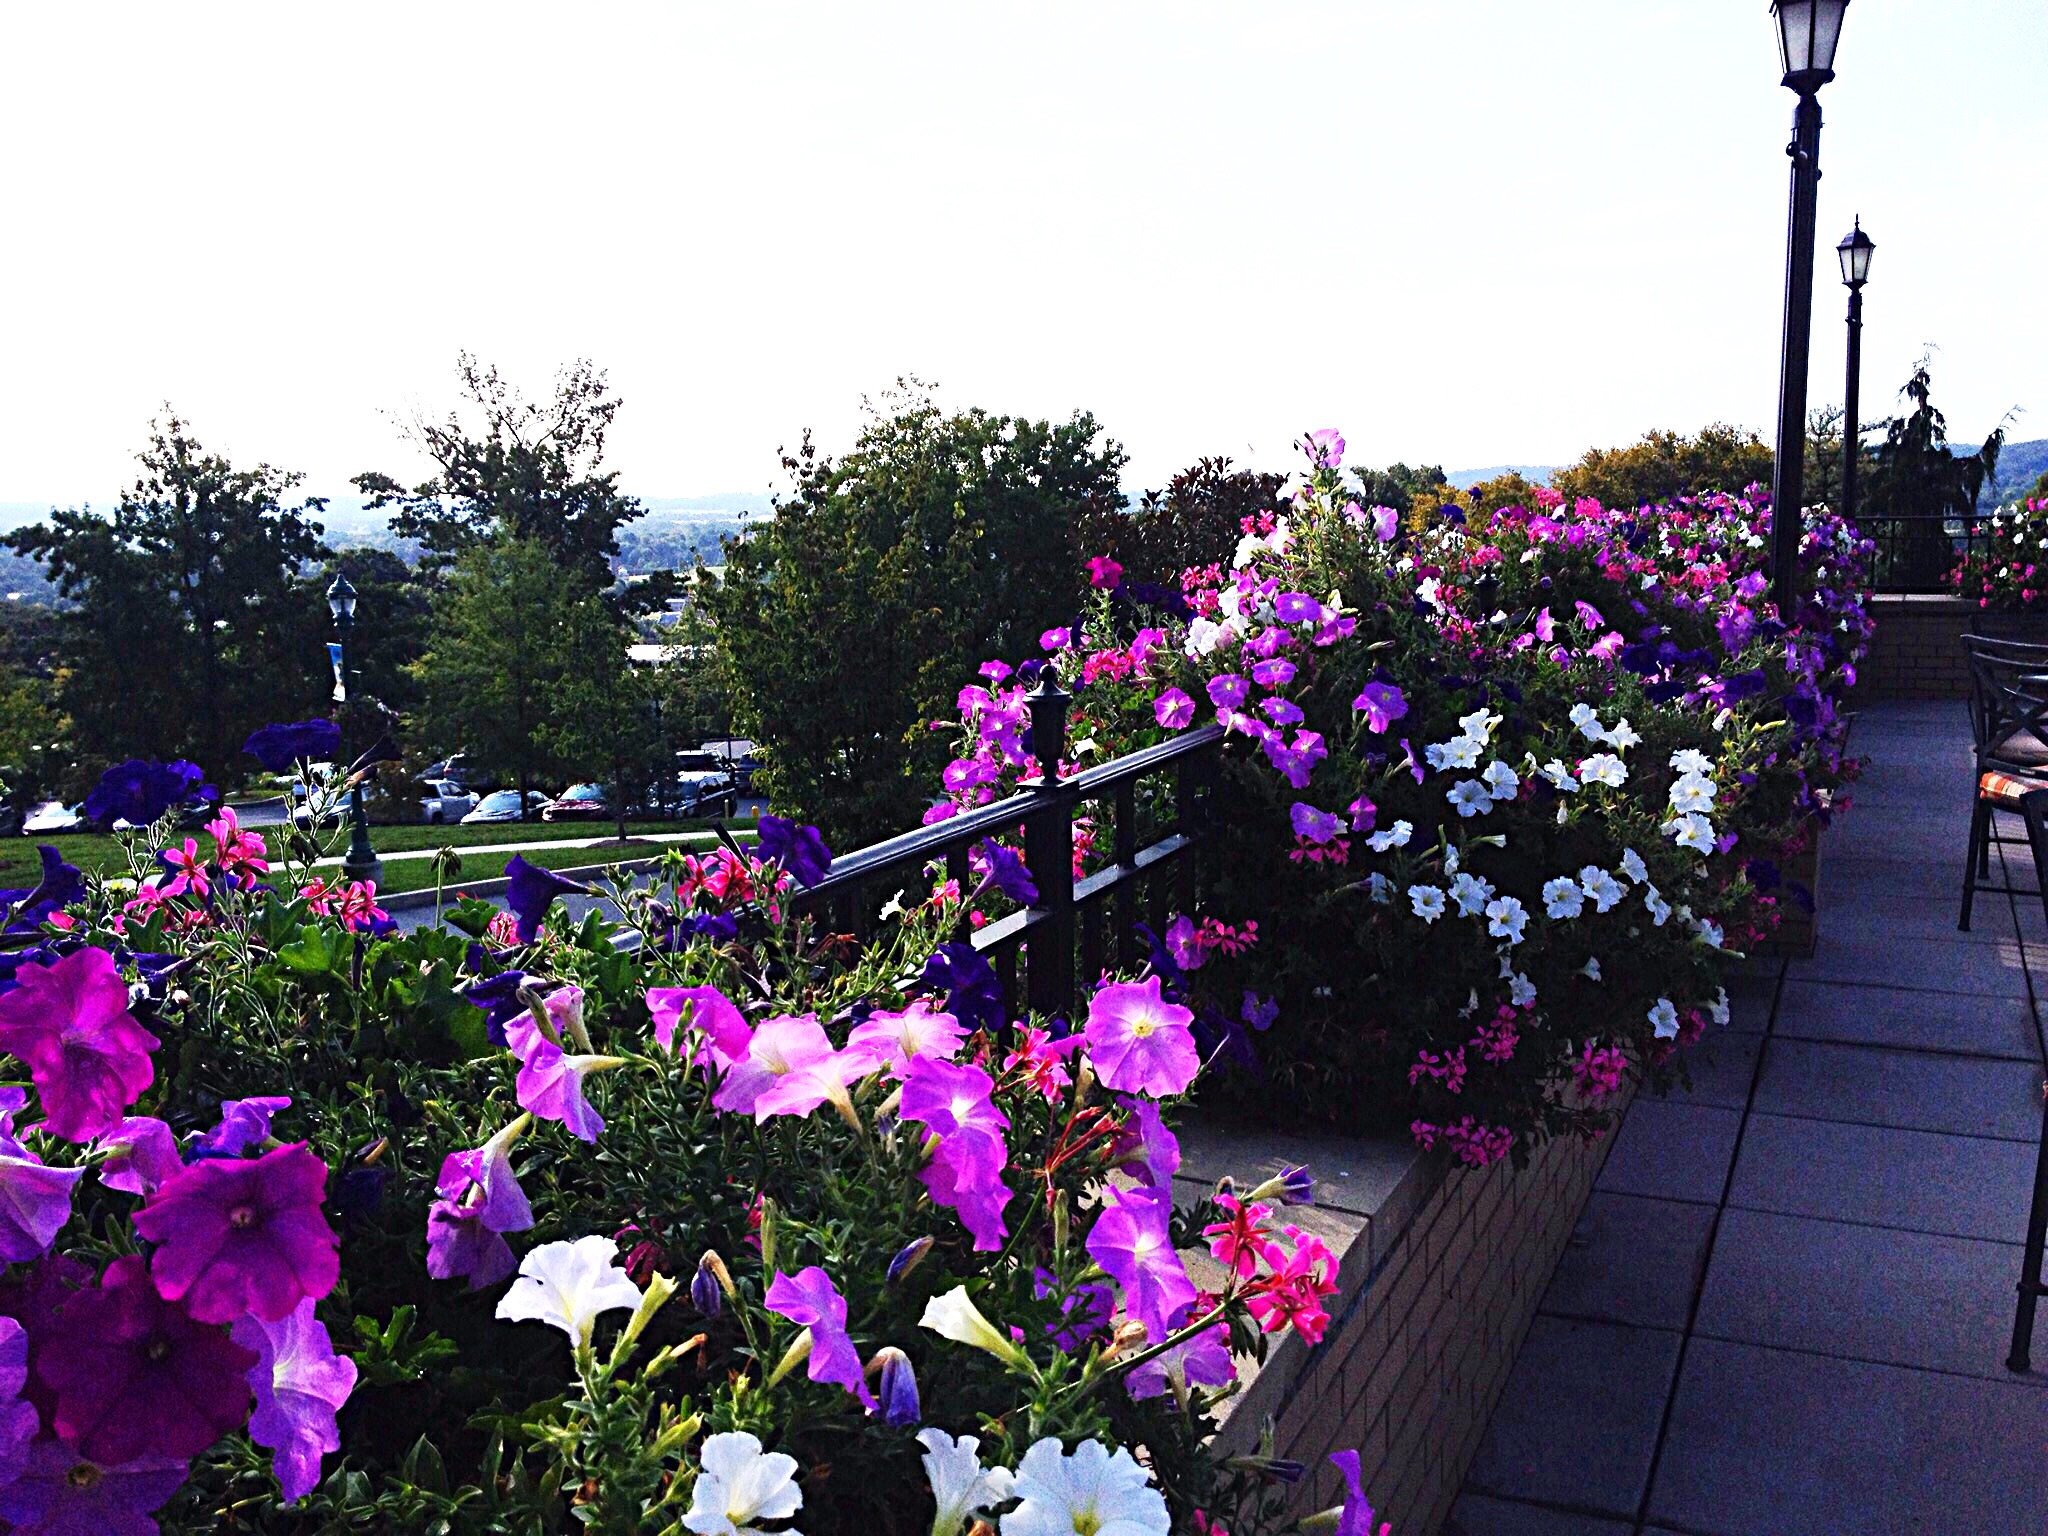 Flowers adorn the terrace railings.